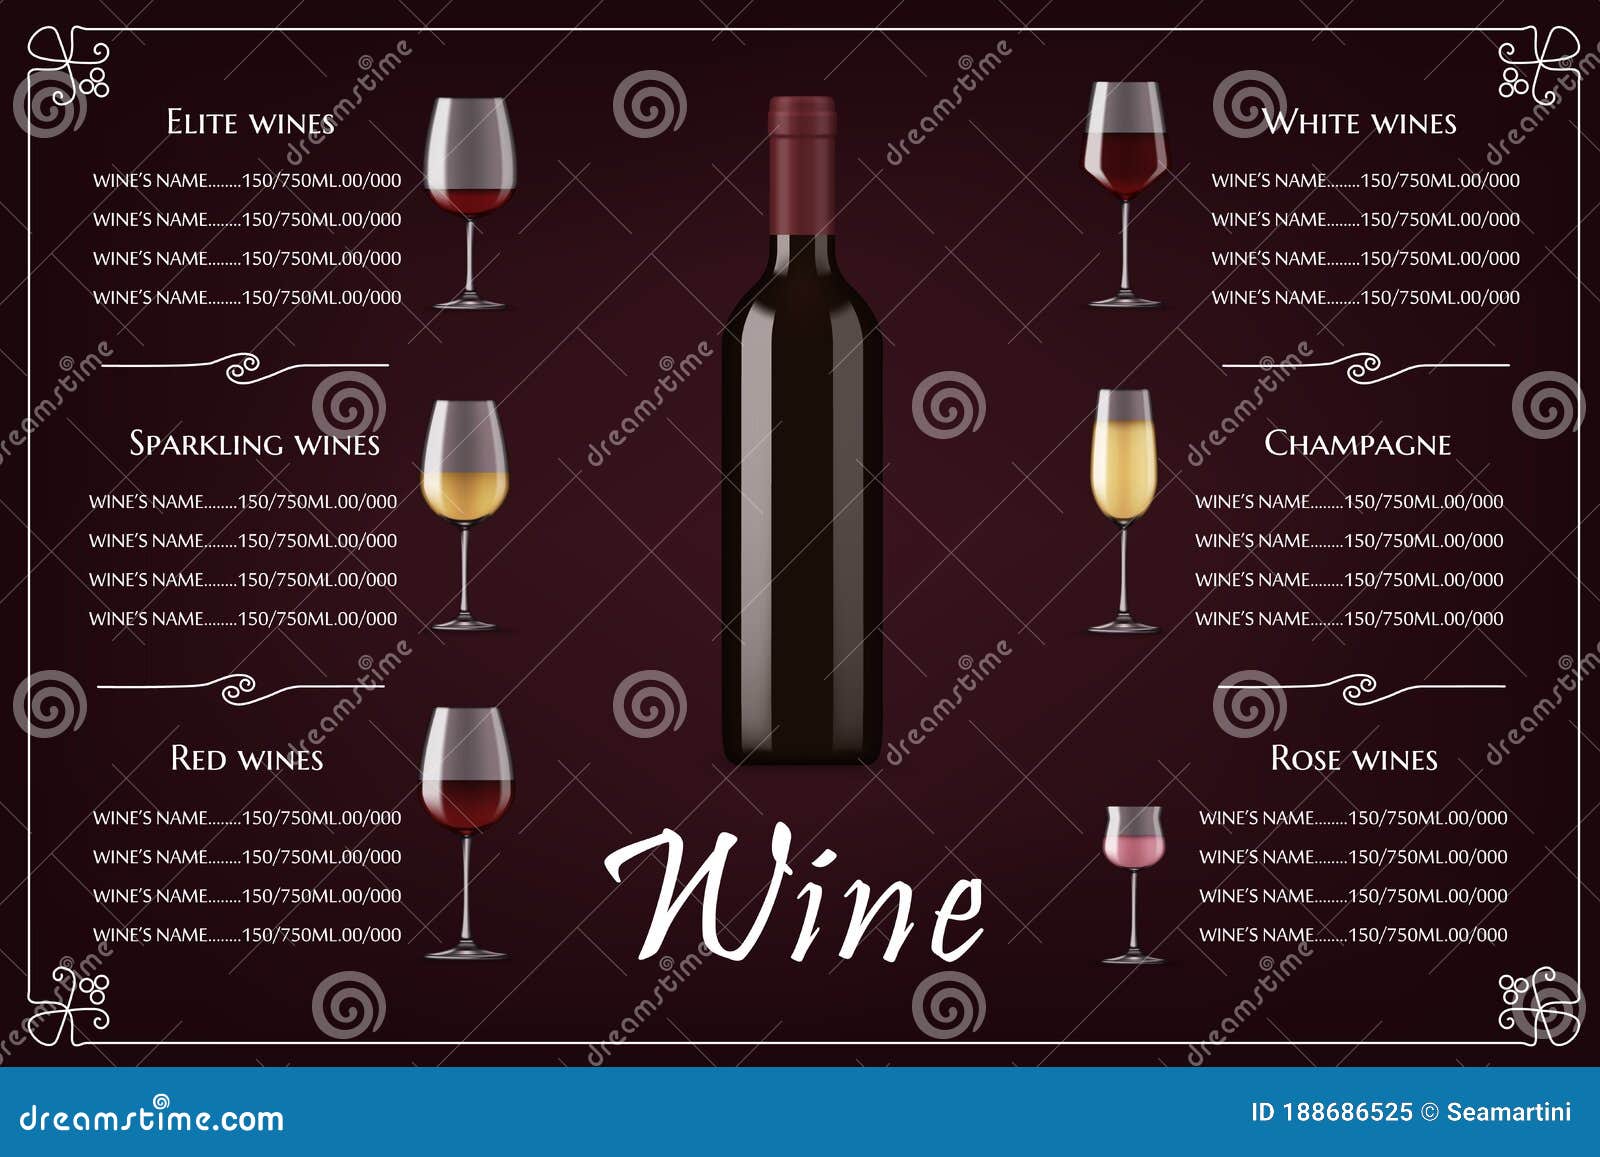 Elite Wines List, Restaurant Menu Vector Template Stock Vector Inside Wine Tasting Menu Template